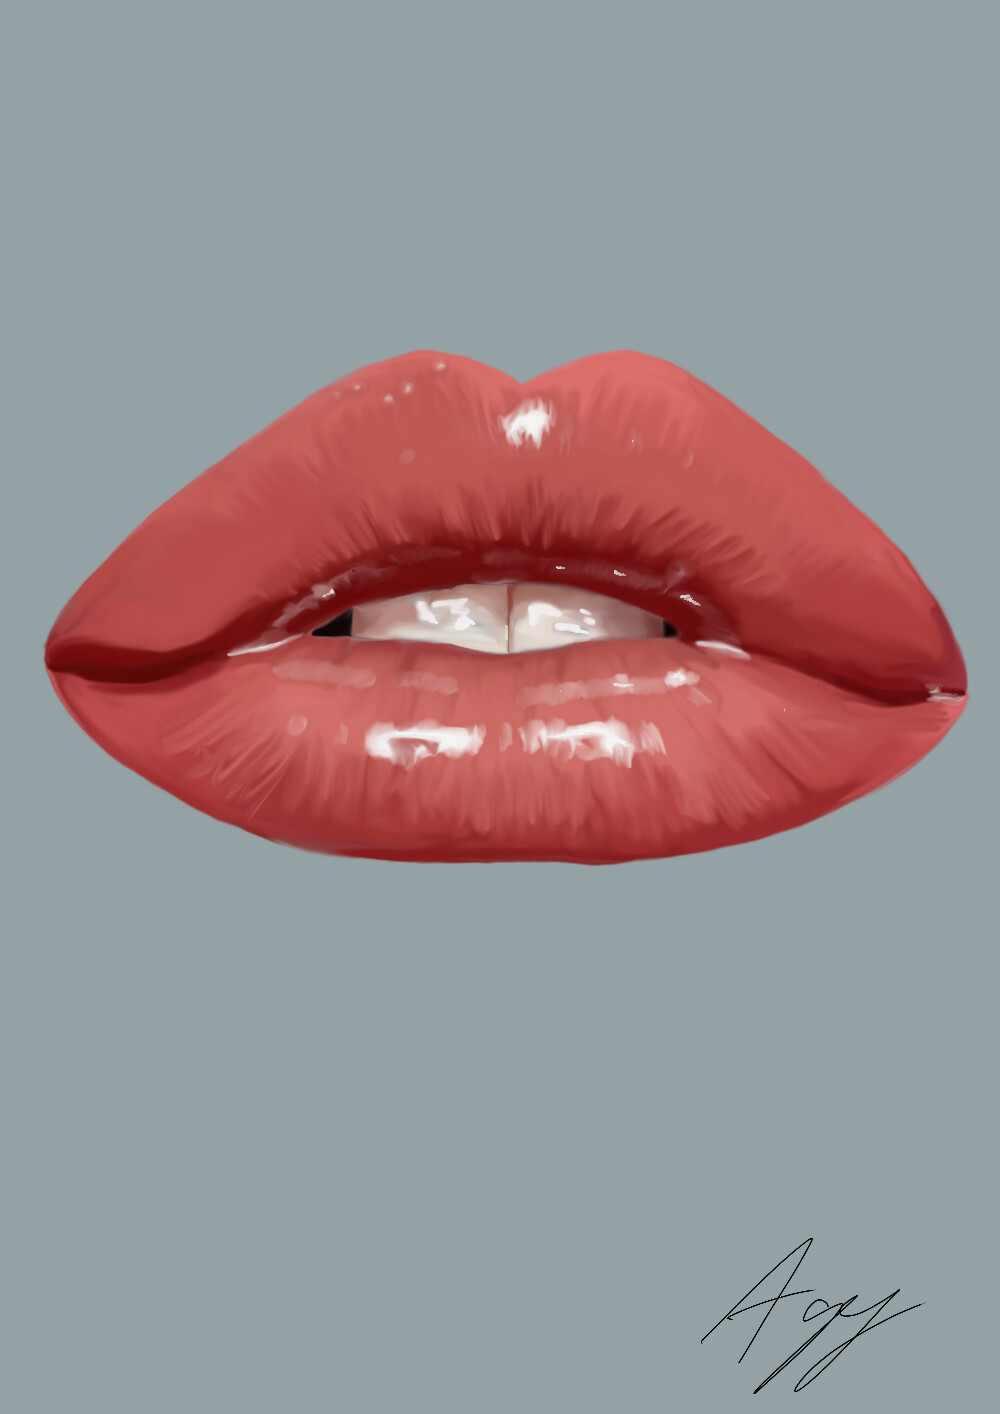 Muhhby - Glossy lips drawing | Facebook